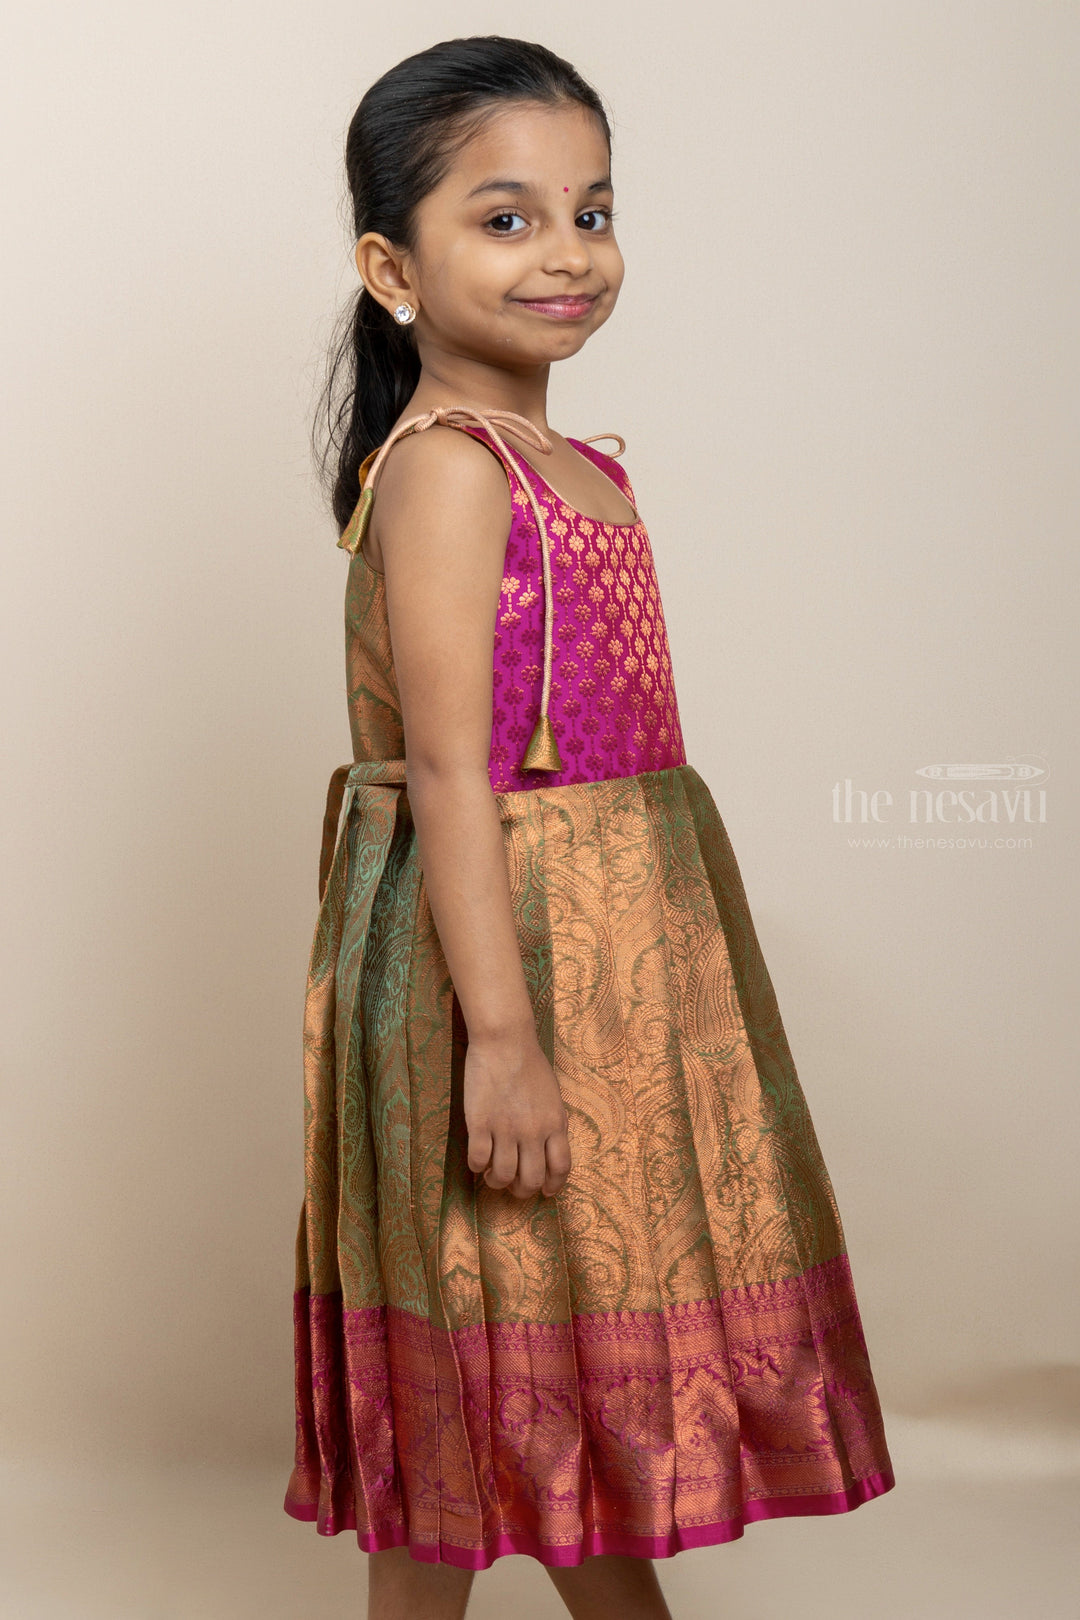 The Nesavu Tie-up Frock Plush Pink And Gold Brocade Printed Tie-Up Frocks For Little Girls Nesavu Captivating Pattu Frocks Online| Pillala Frocks| The Nesavu